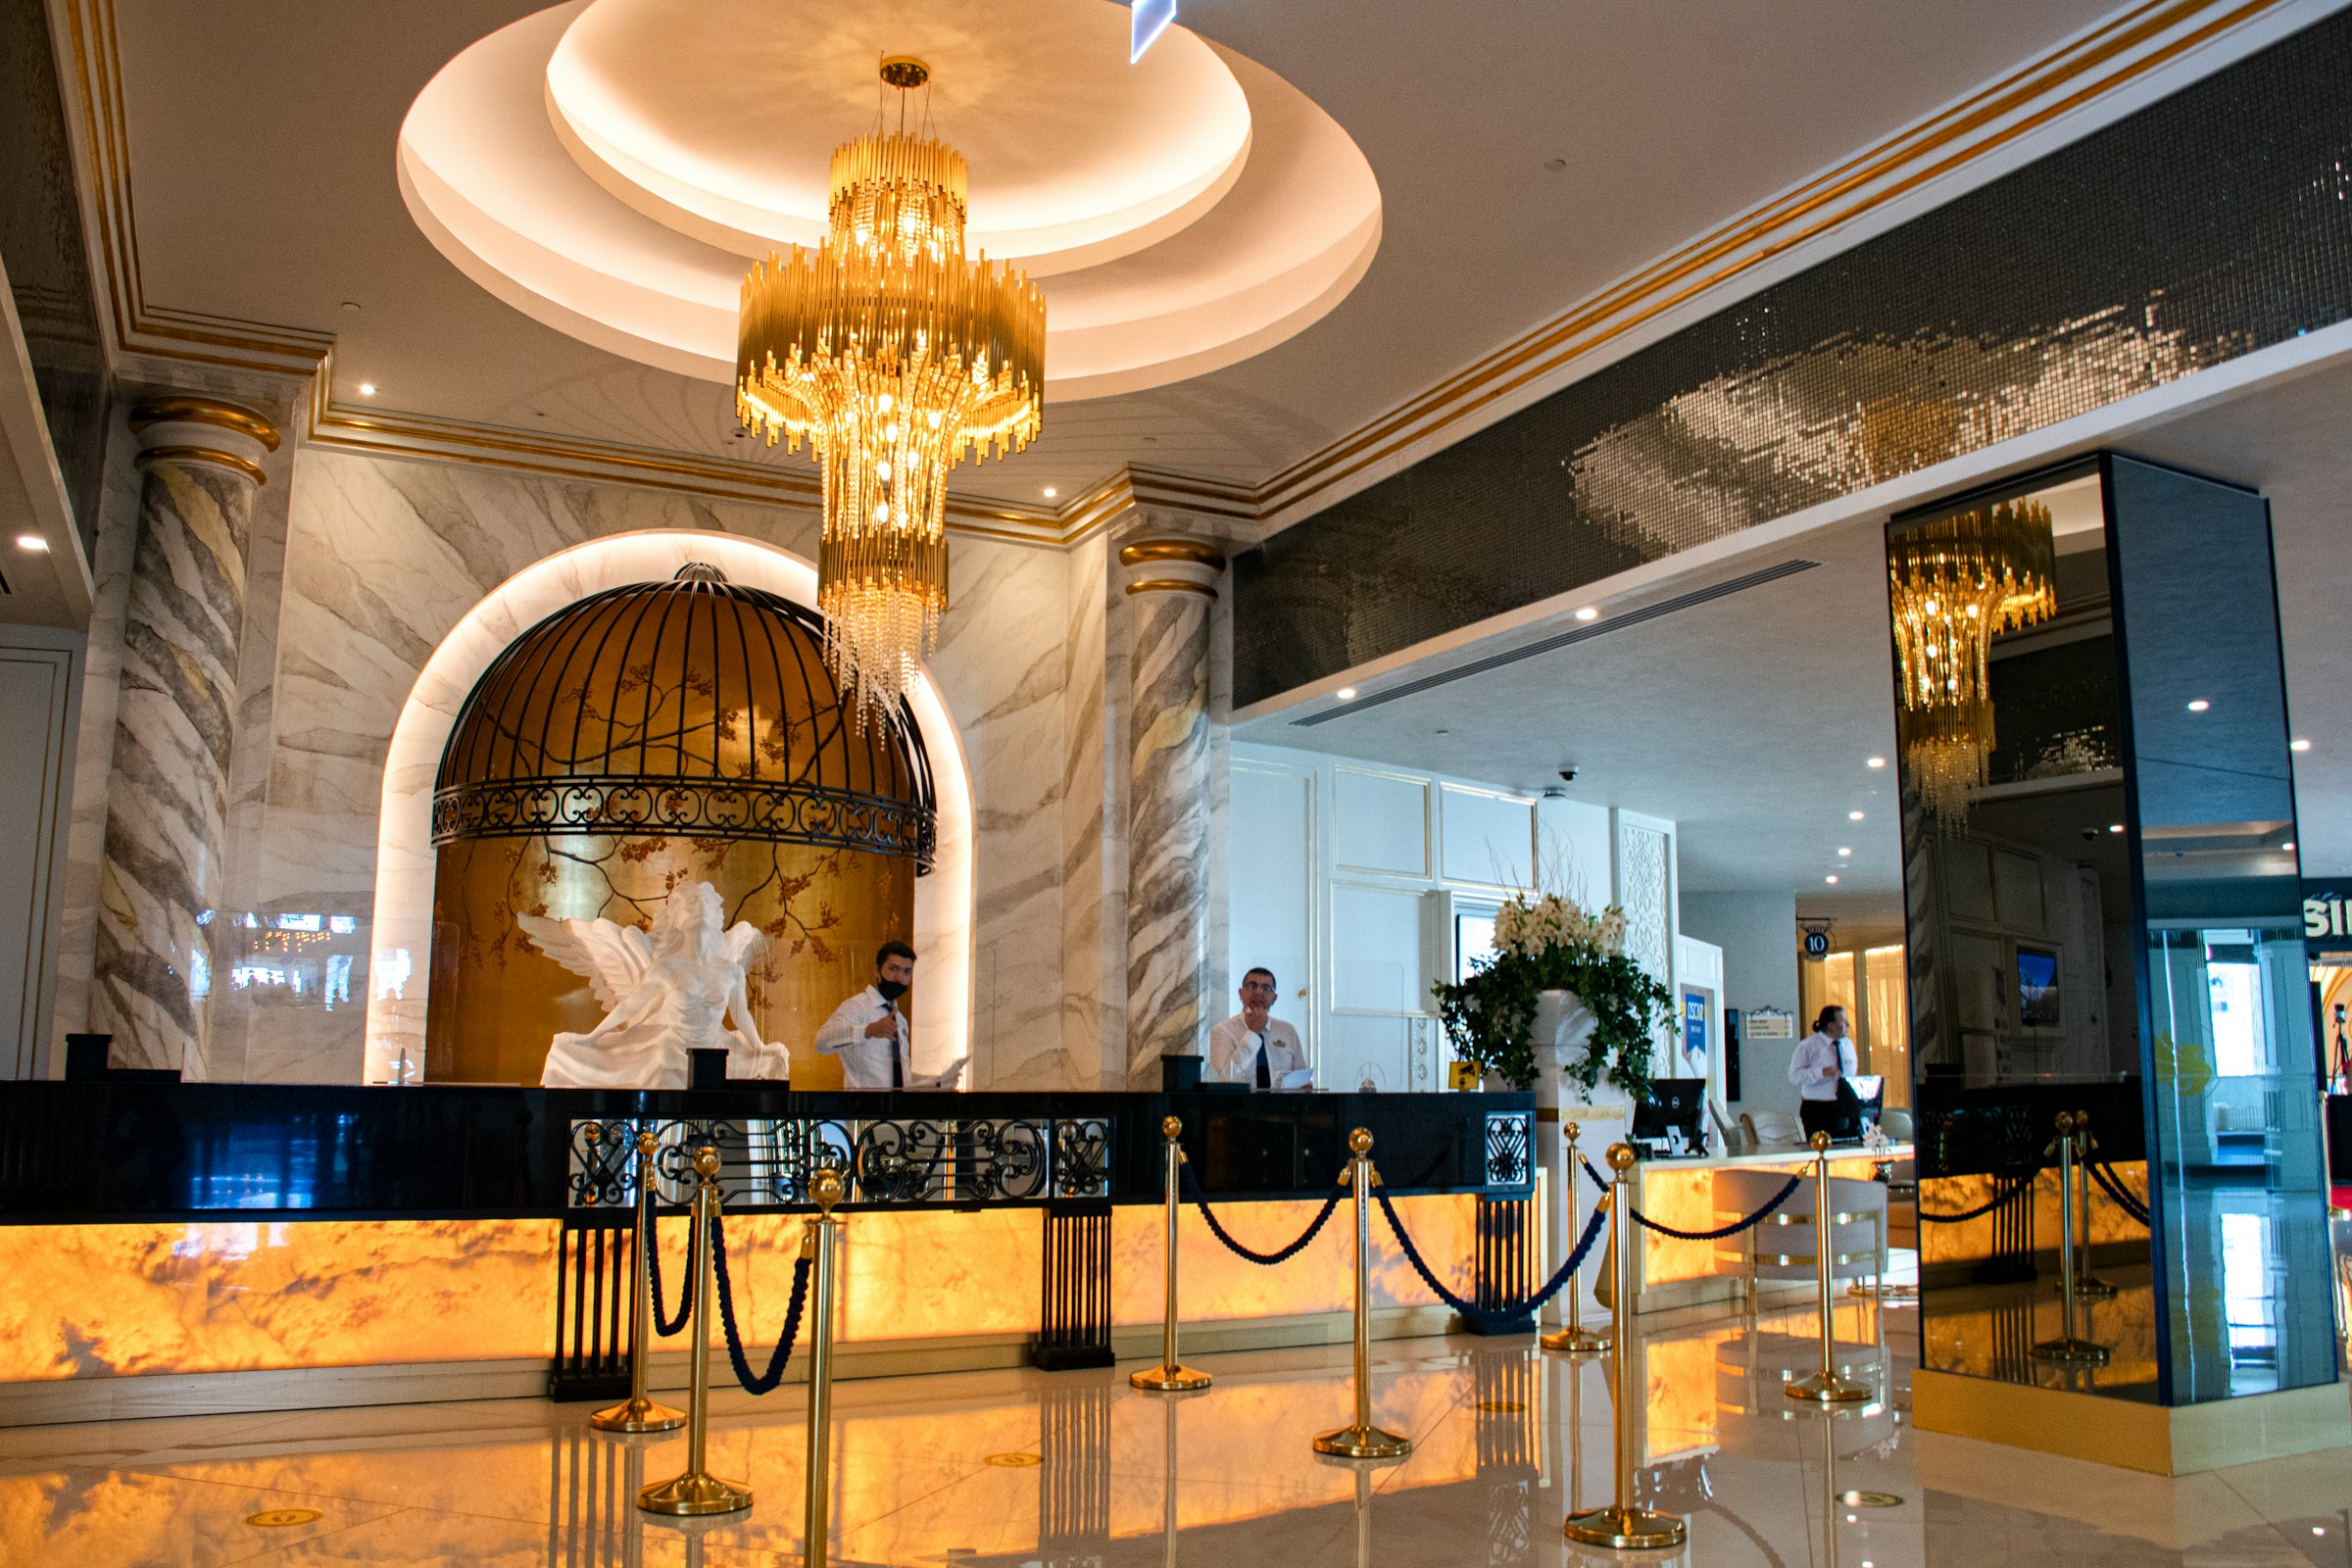 A fancy hotel lobby | Source: Unsplash